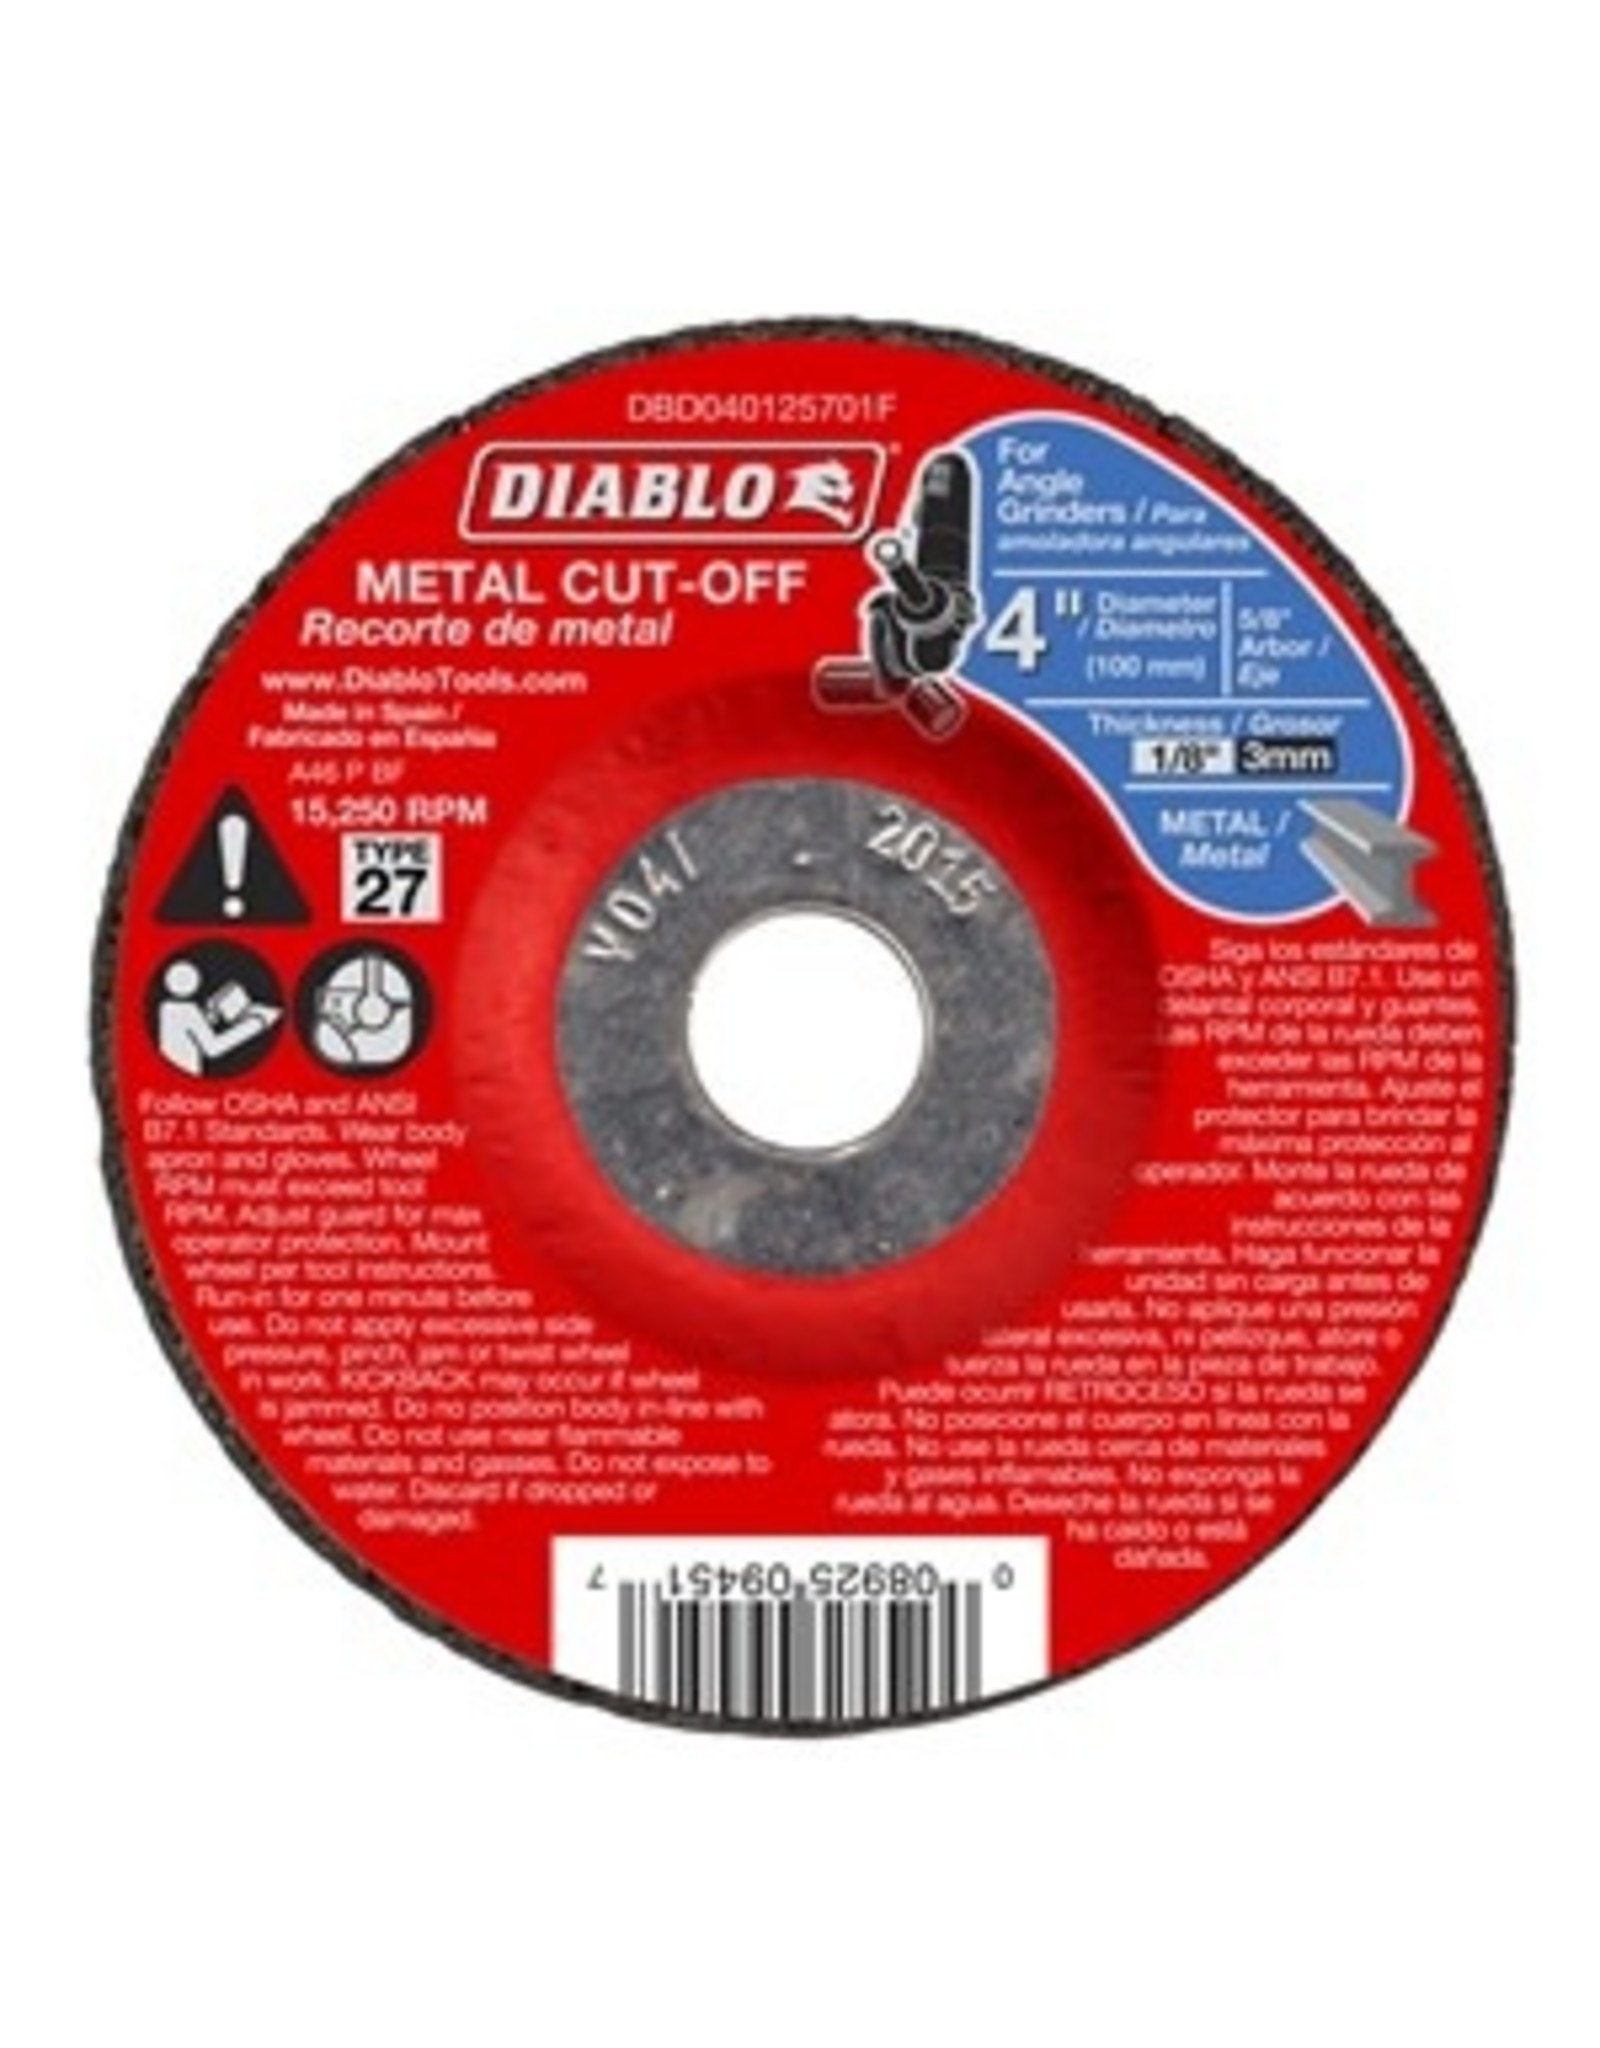 Diablo Diablo DBD040125701F Cut-Off Wheel, 4 in Dia, 1/8 in Thick, 5/8 in Arbor, Aluminum Oxide Abrasive